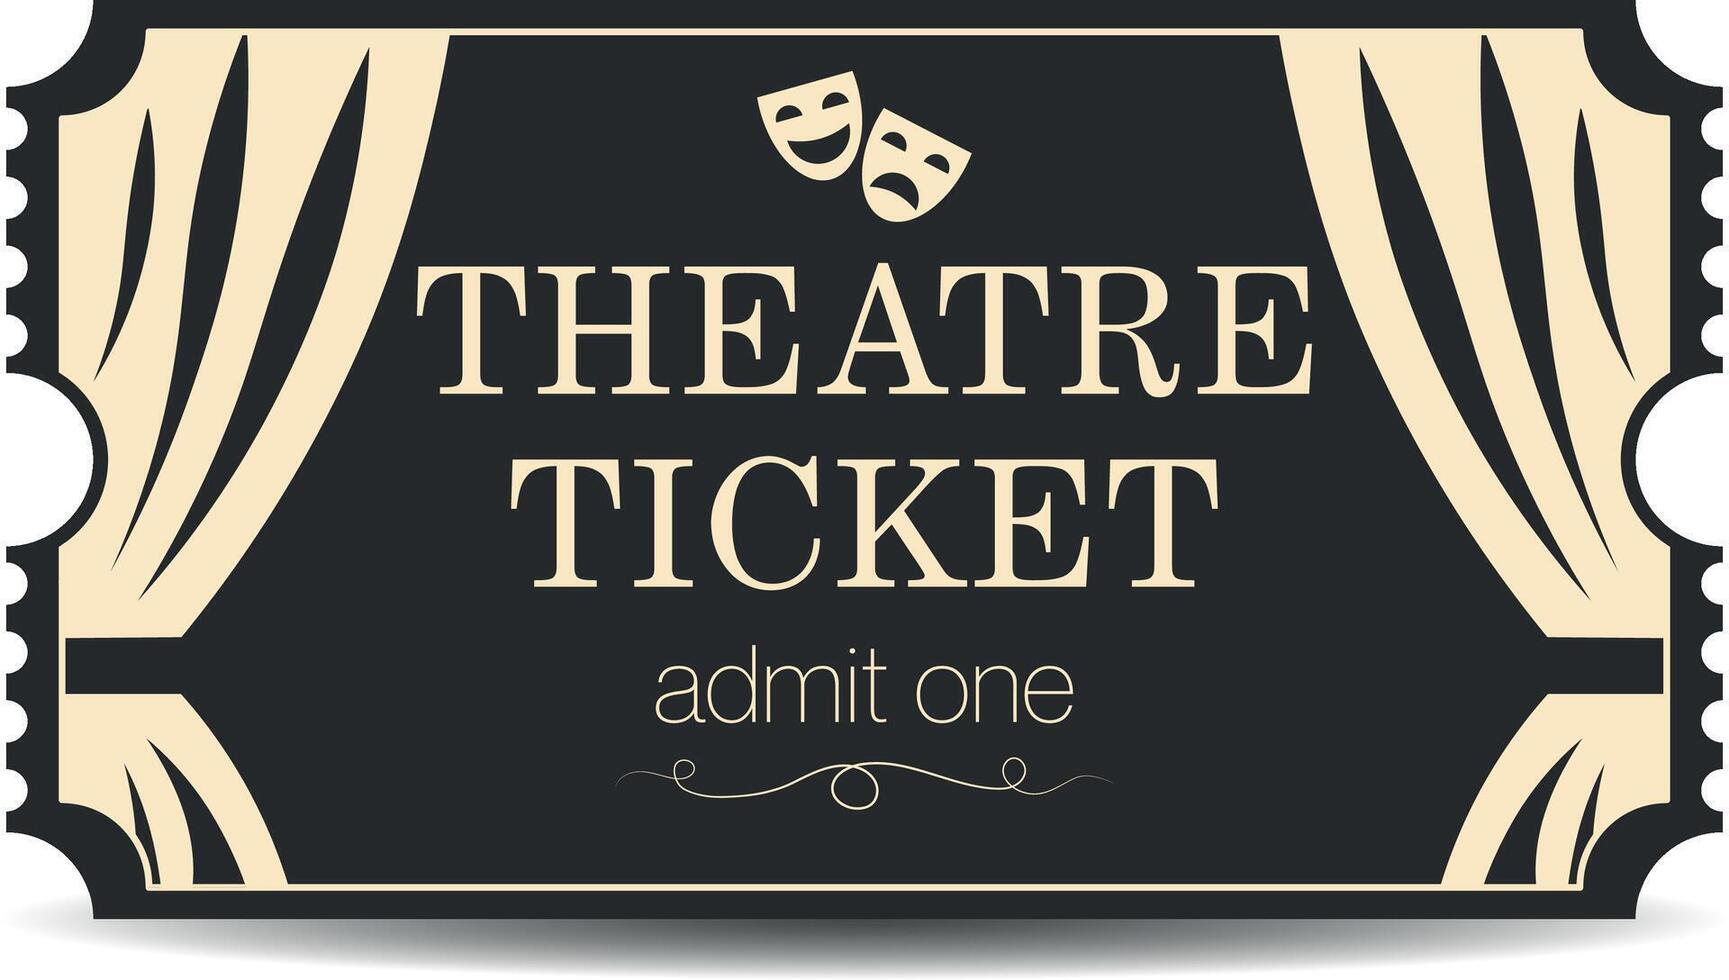 Admitem 1 teatro bilhete com cortinas vetor